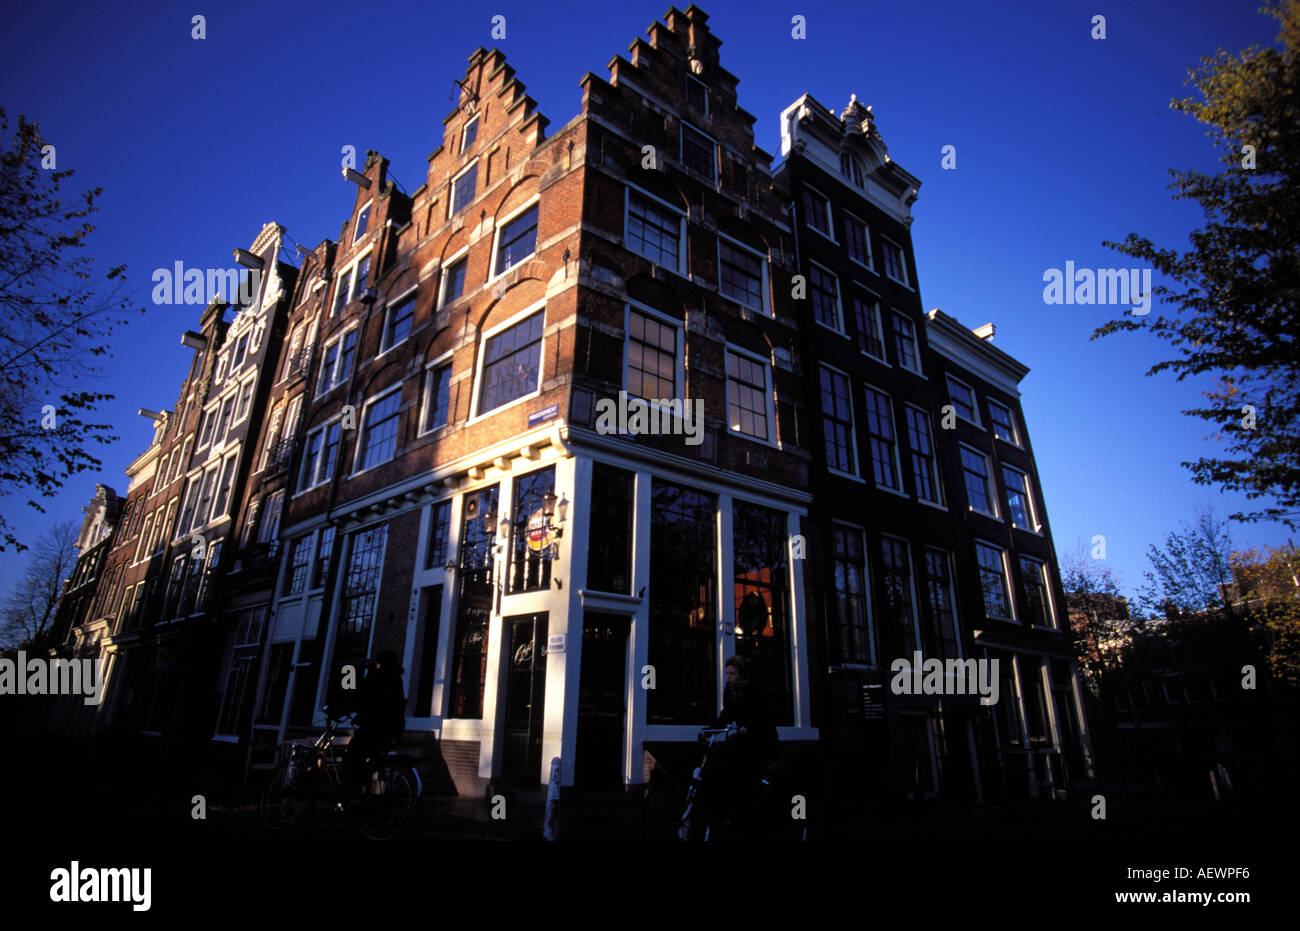 Angolo di Amsterdam House brouwersgracht e prinsengracht Foto Stock